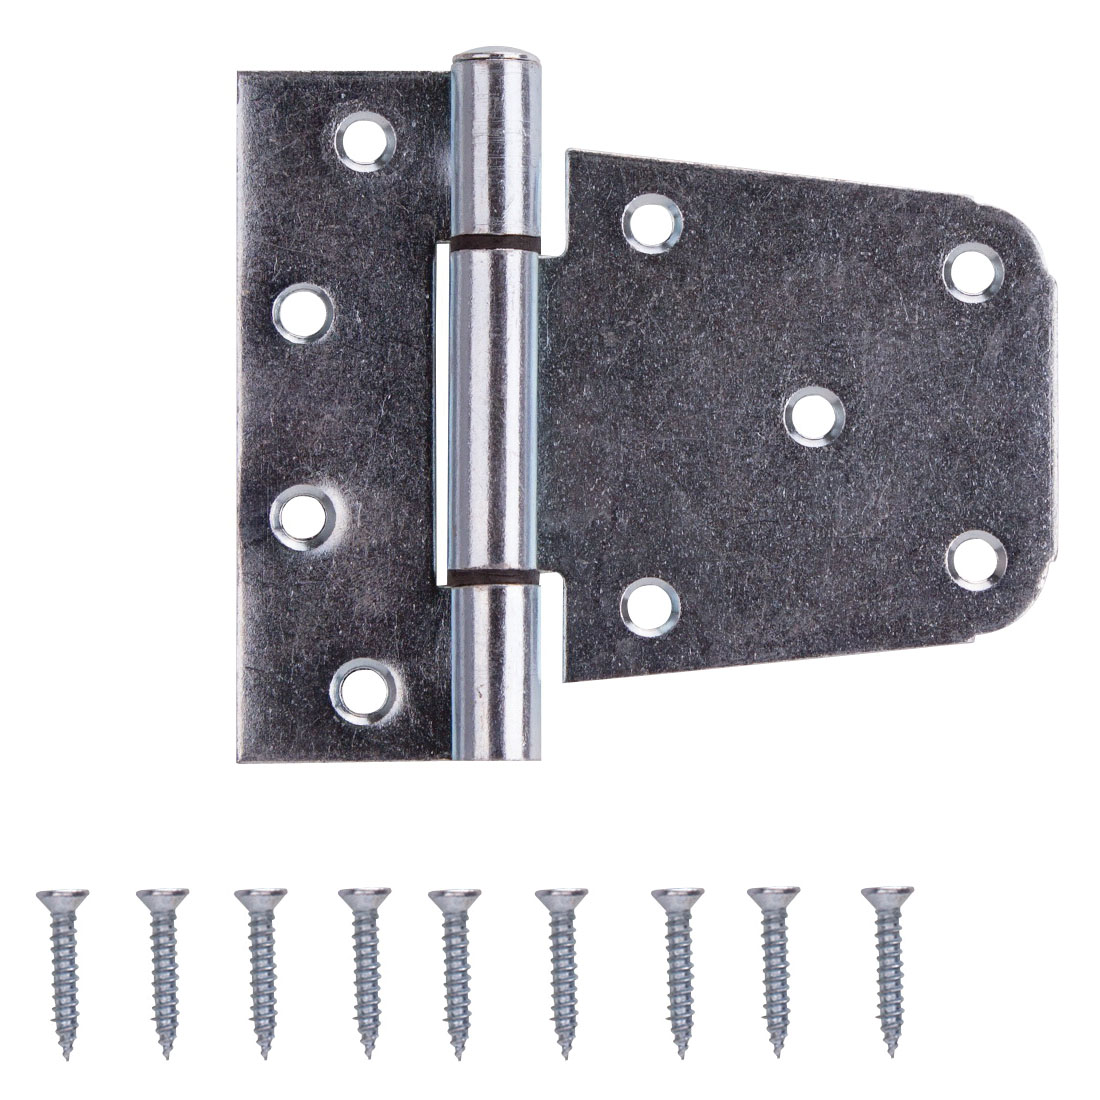 LR-181-PS Gate Hinge, Steel, Zinc, Fixed Pin, 180 deg Range of Motion, 46 (Pair) lb